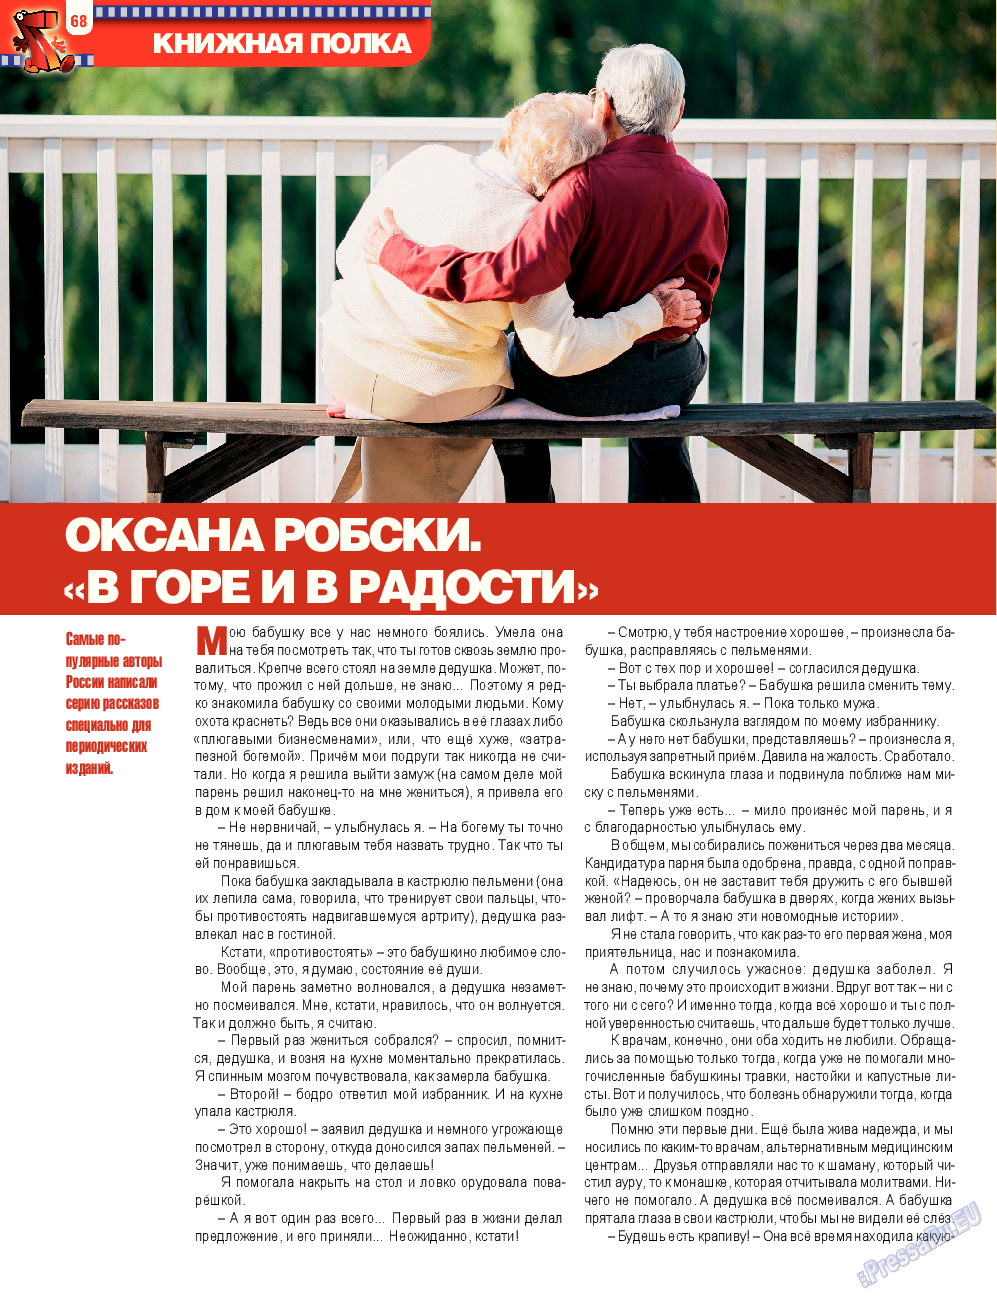 7плюс7я (журнал). 2014 год, номер 21, стр. 68